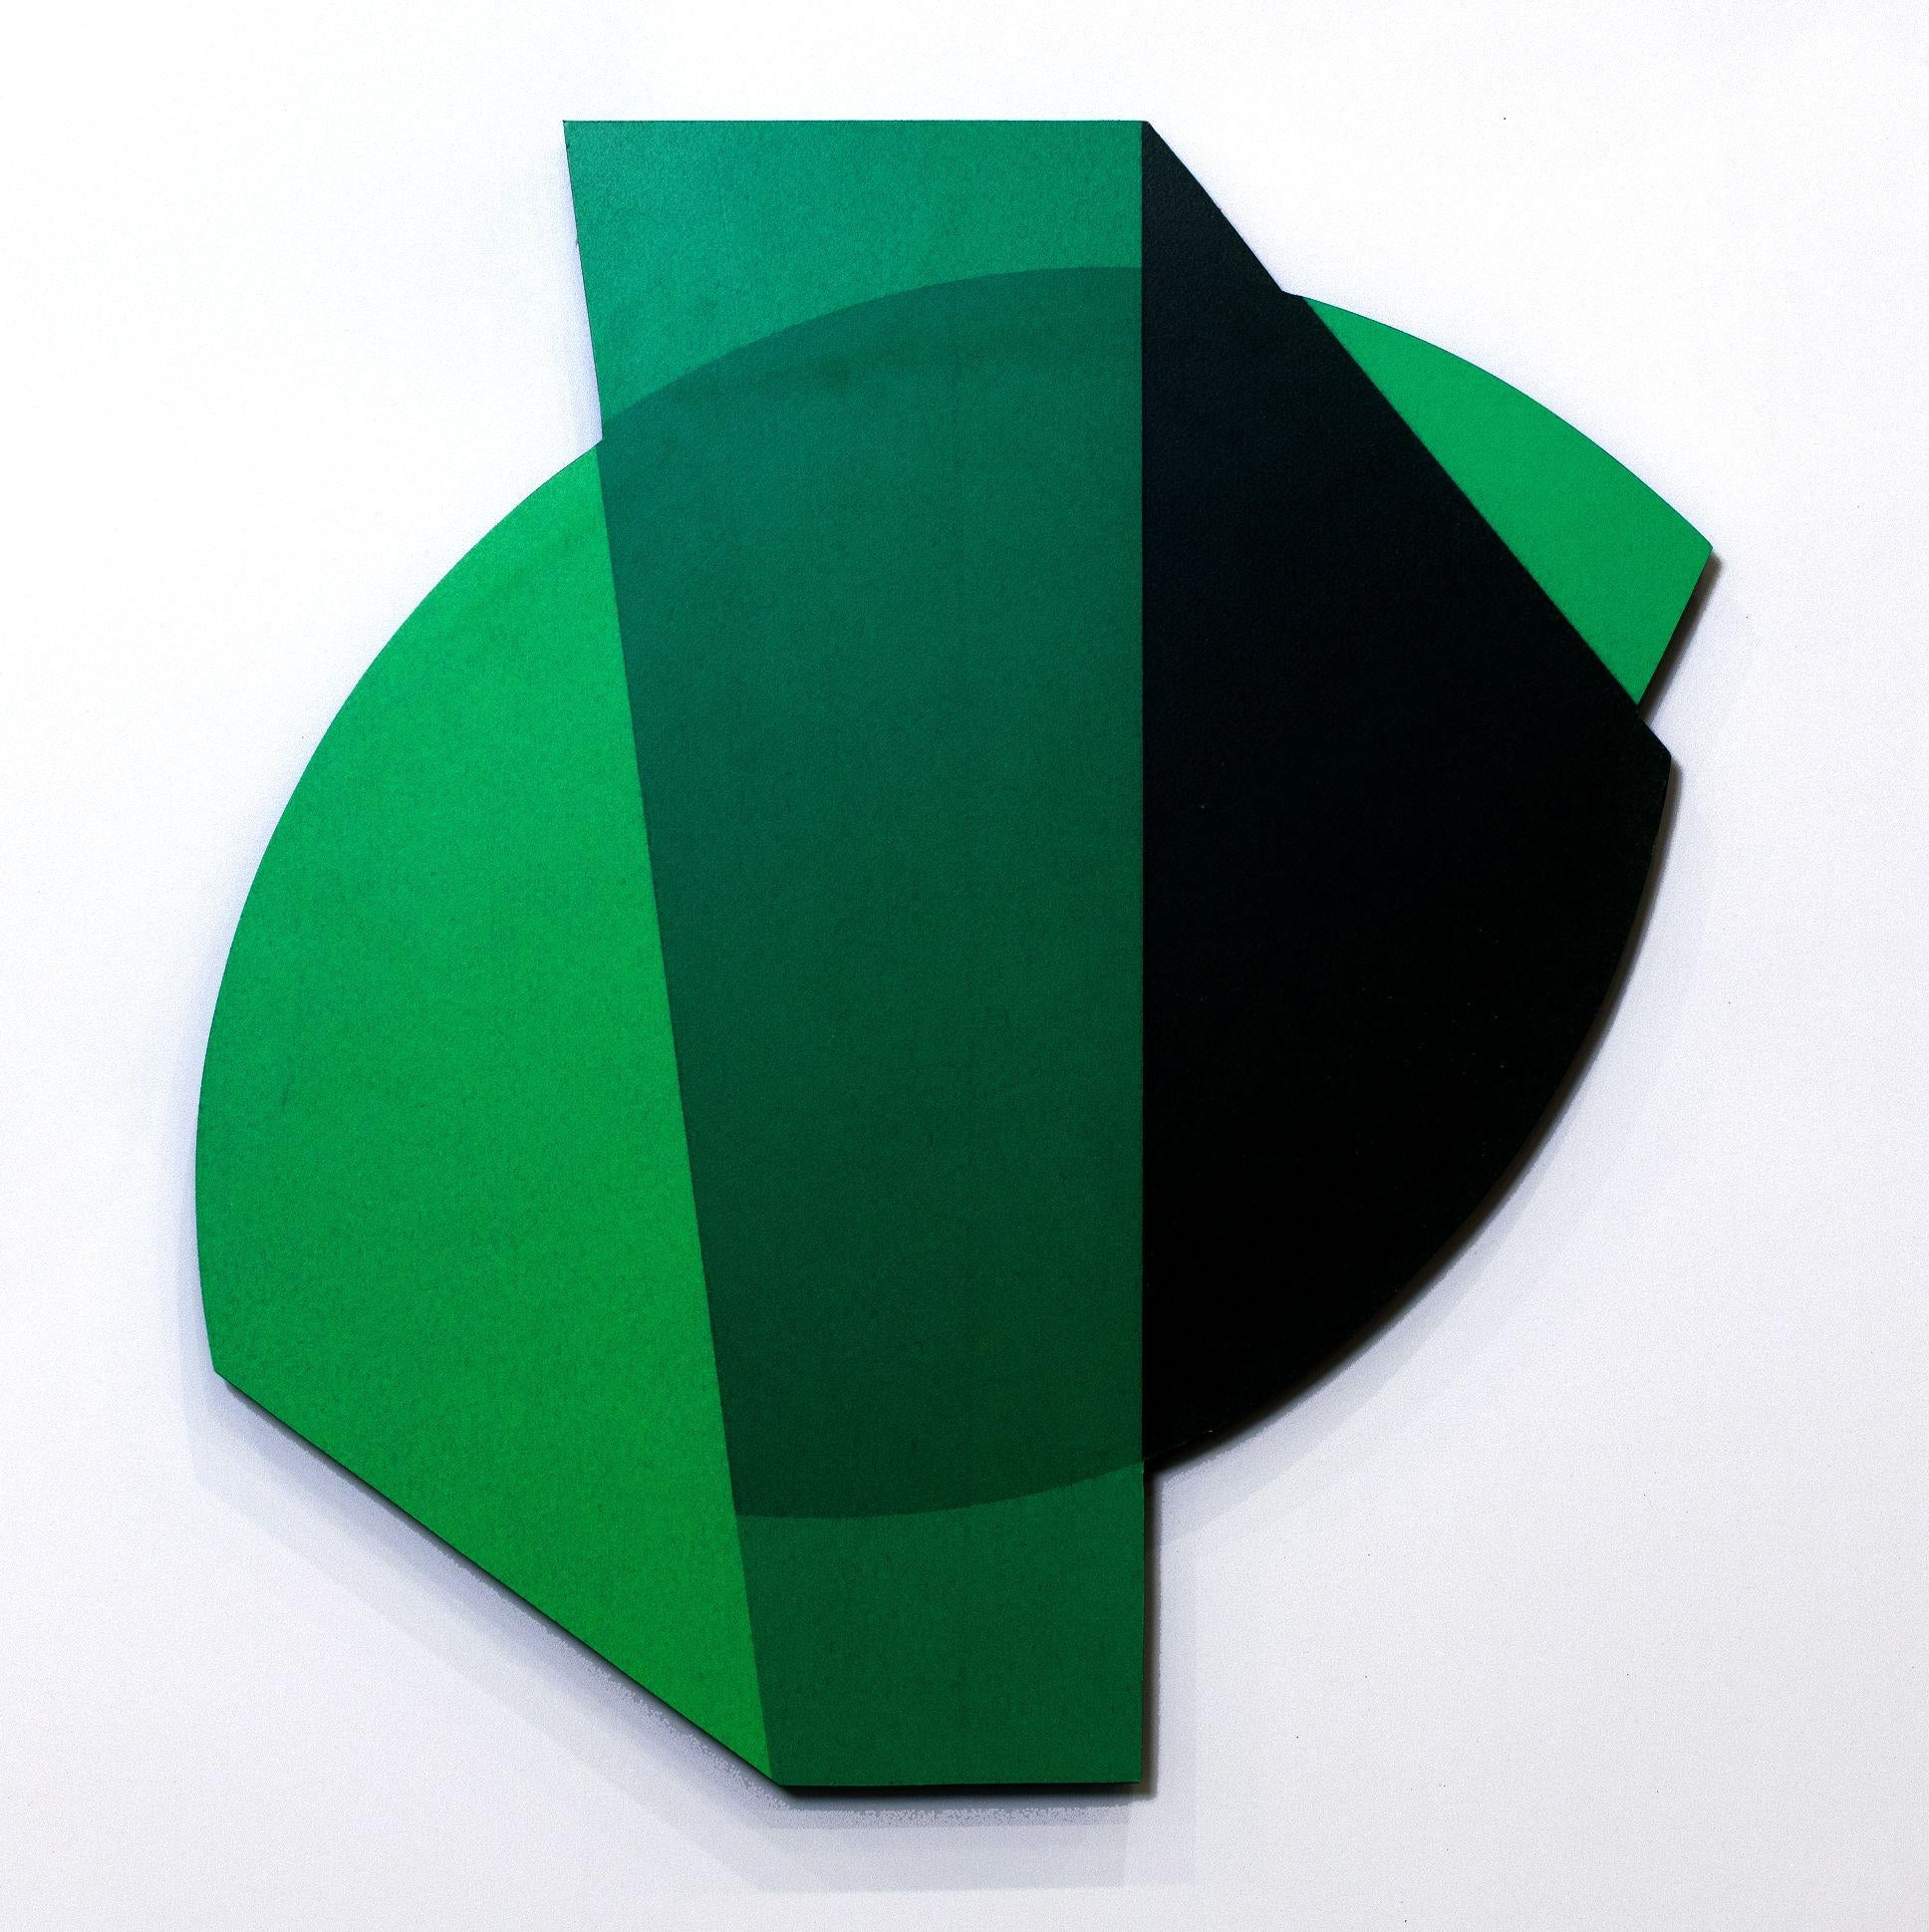 Willard Boepple Abstract Print - Green Ganesh